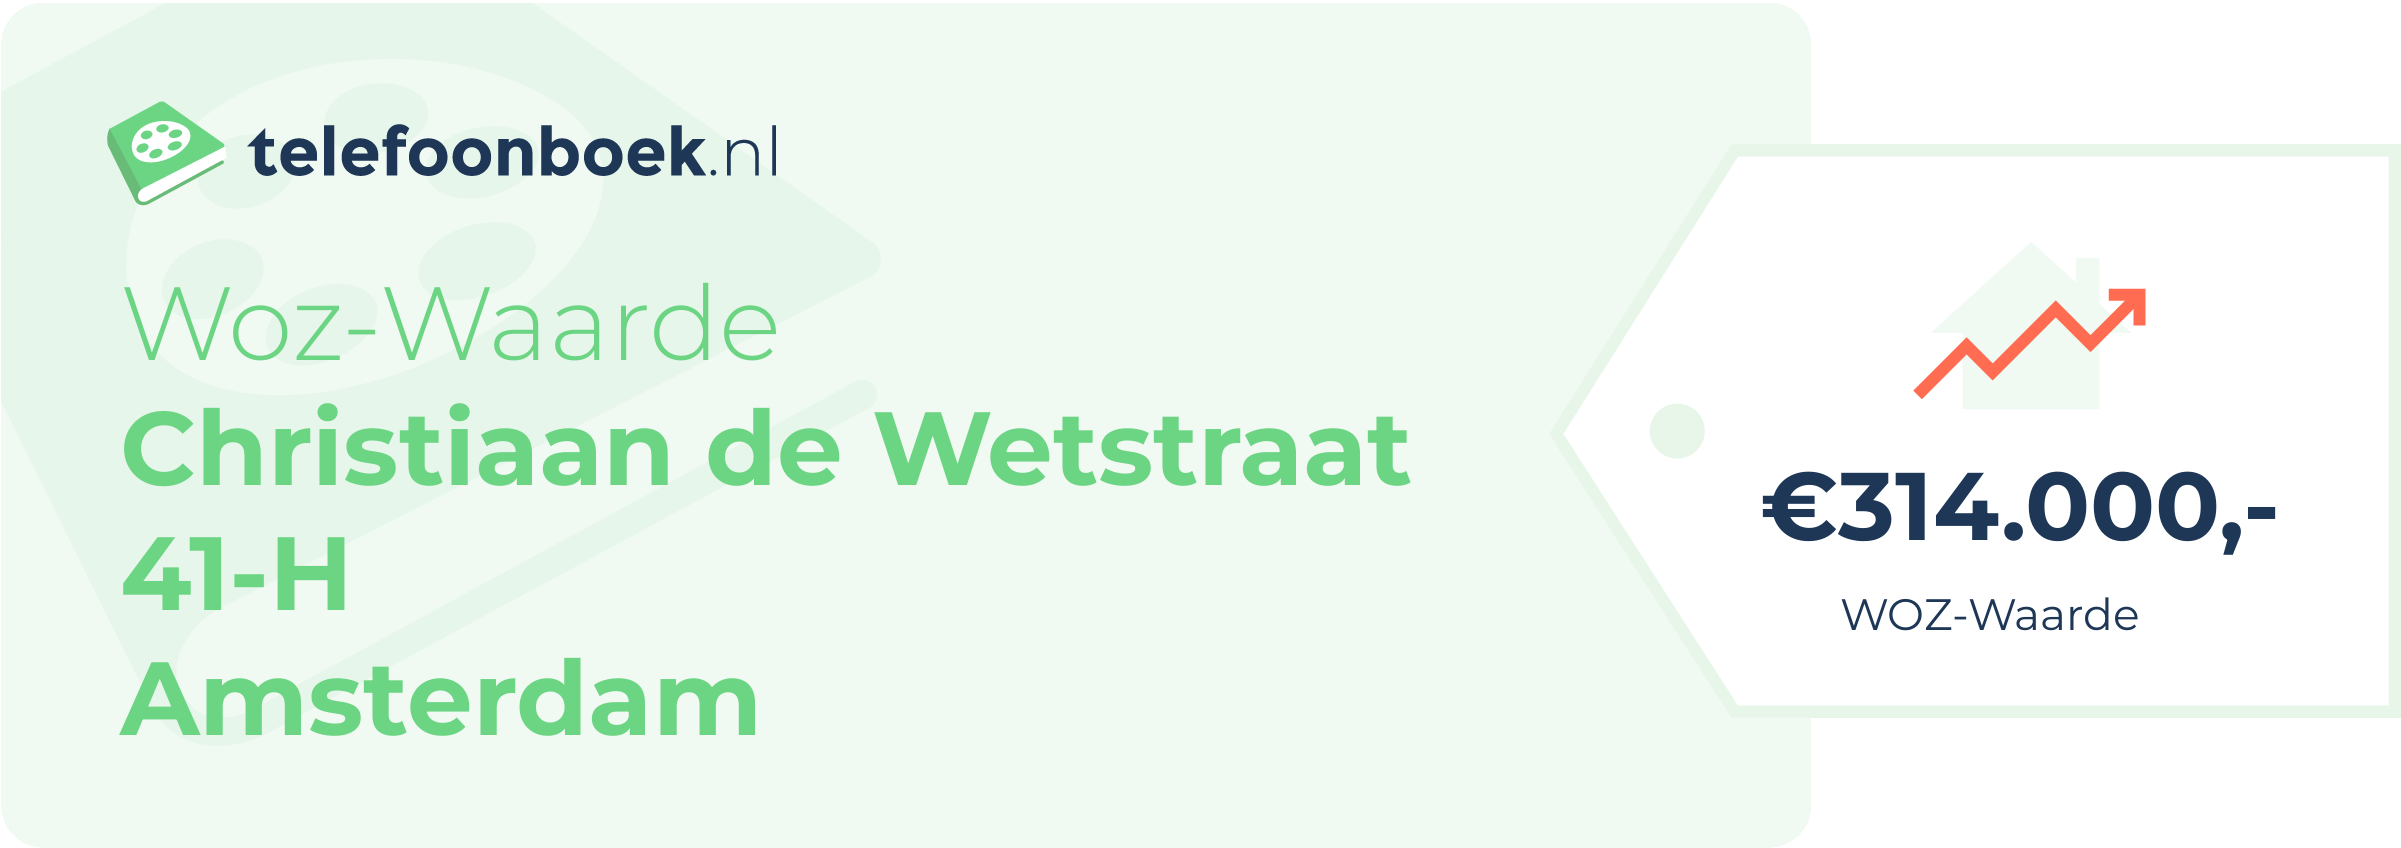 WOZ-waarde Christiaan De Wetstraat 41-H Amsterdam